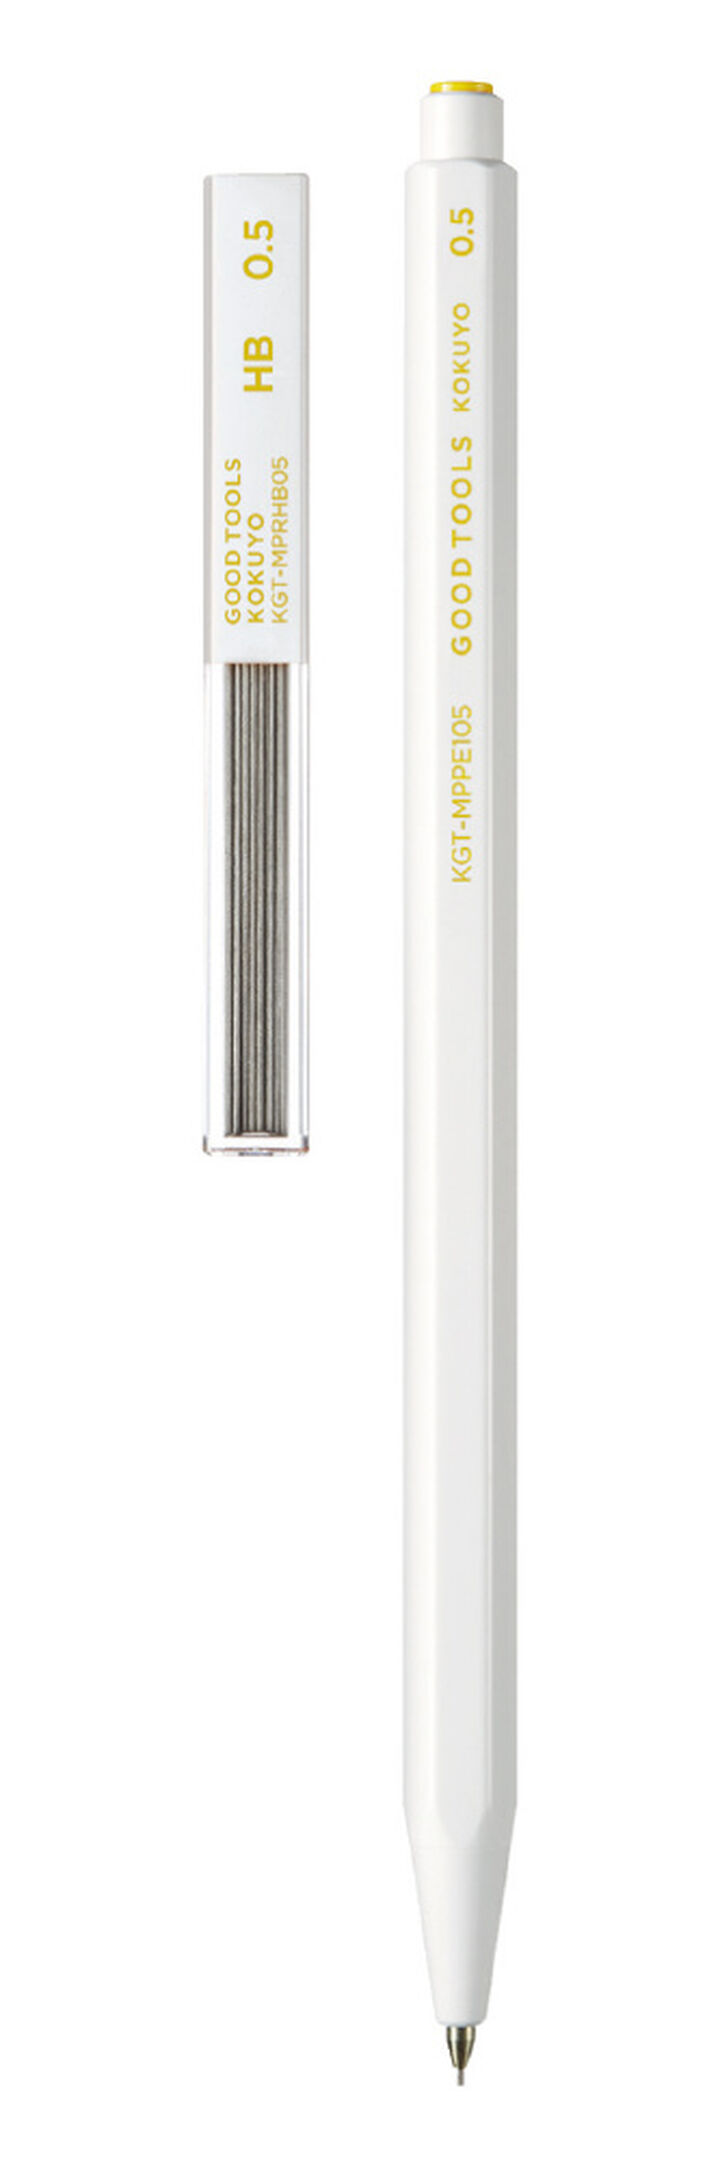 GOOD TOOLS Mechanical Pencil lead 0.5mm HB,White, medium